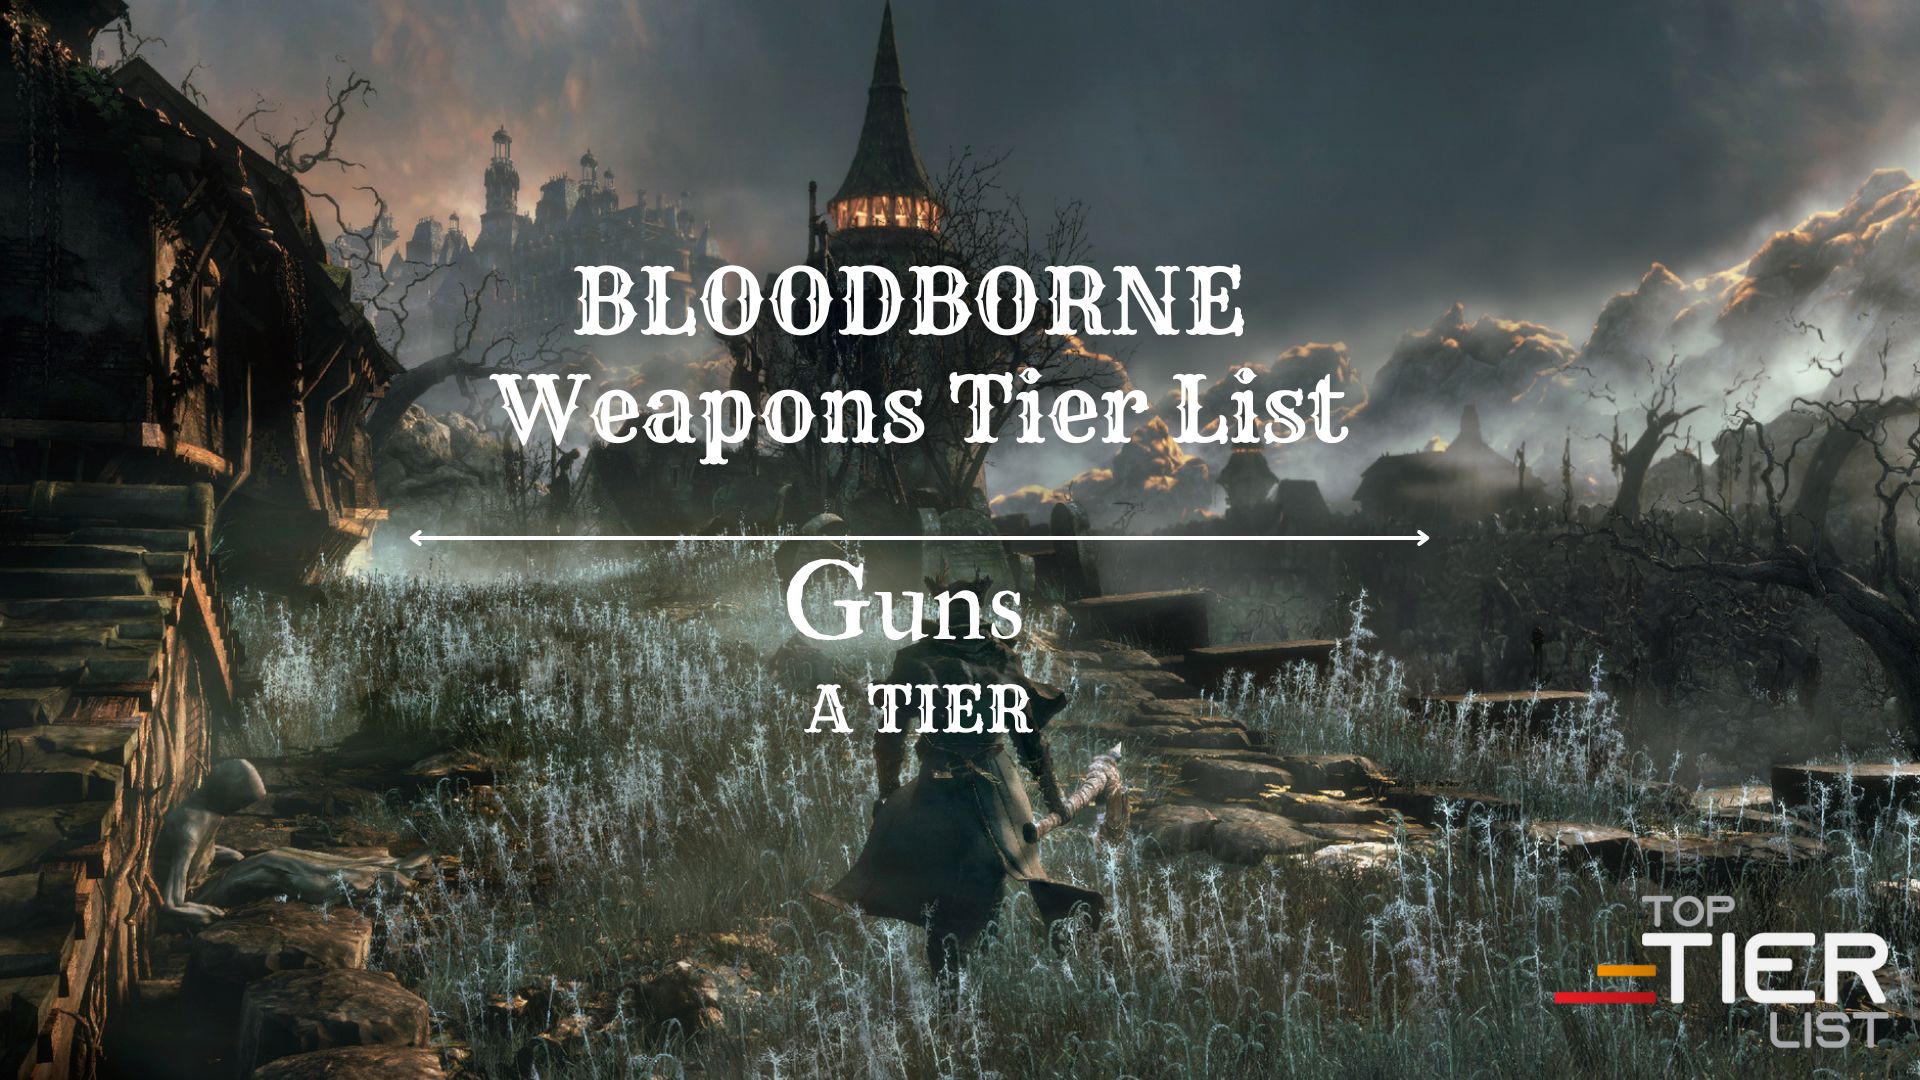 A Tier Bloodborne weapons tier list